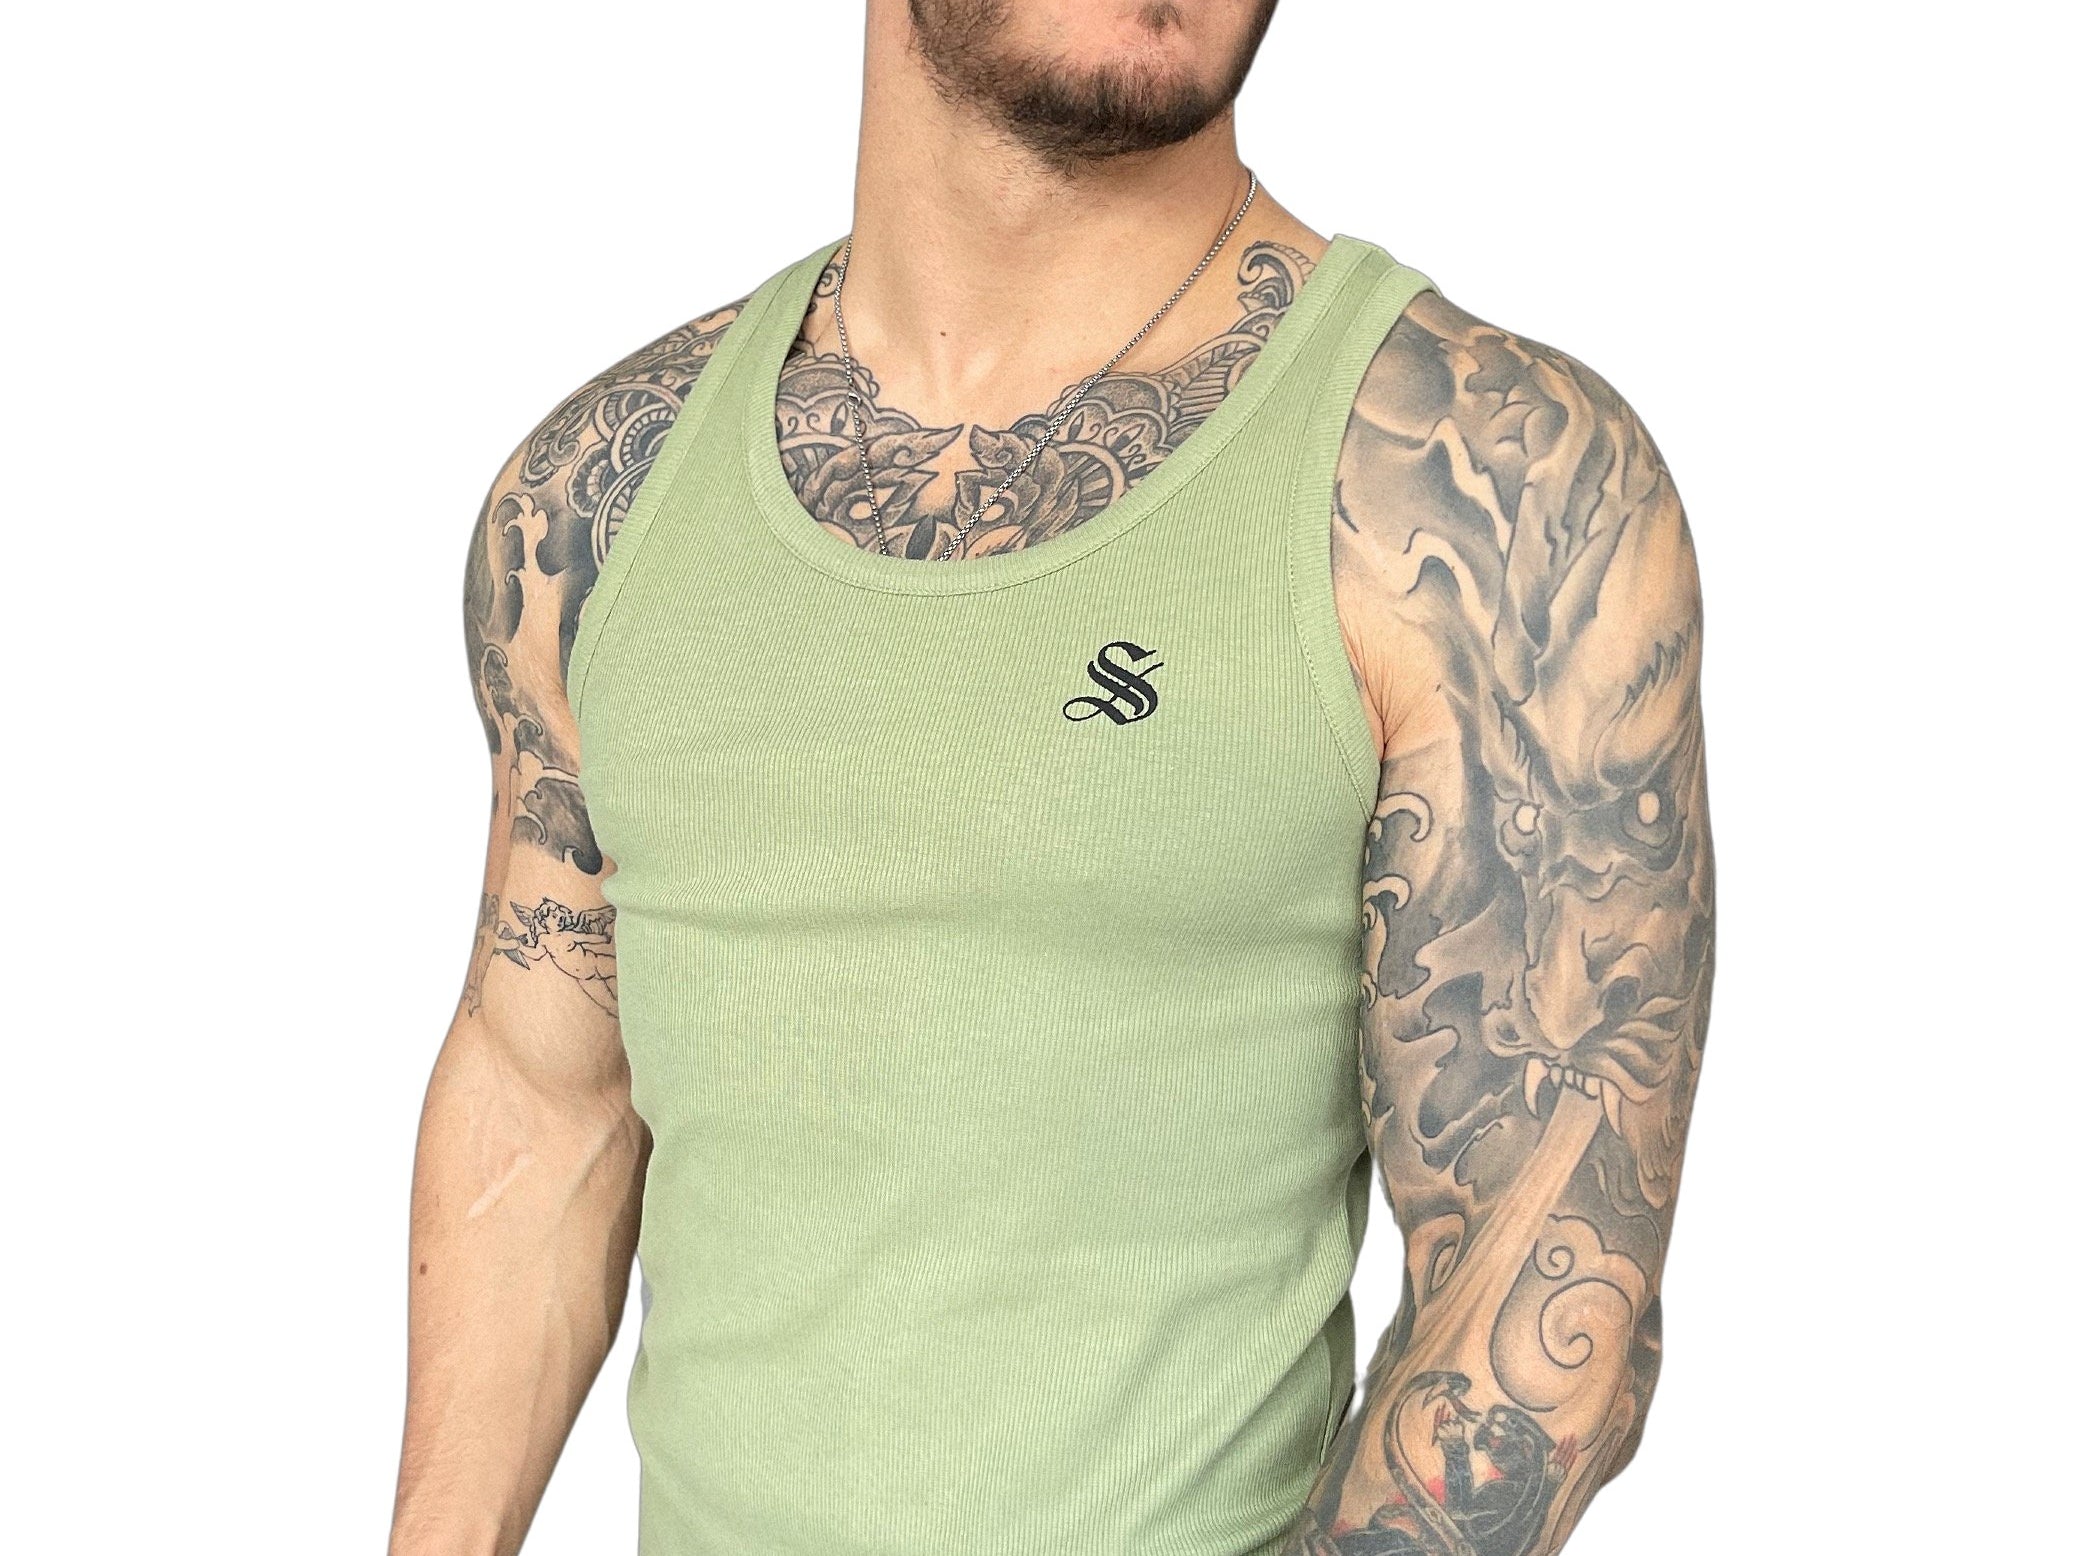 Army Mood - Khaki Tank Top for Men - Sarman Fashion - Wholesale Clothing Fashion Brand for Men from Canada